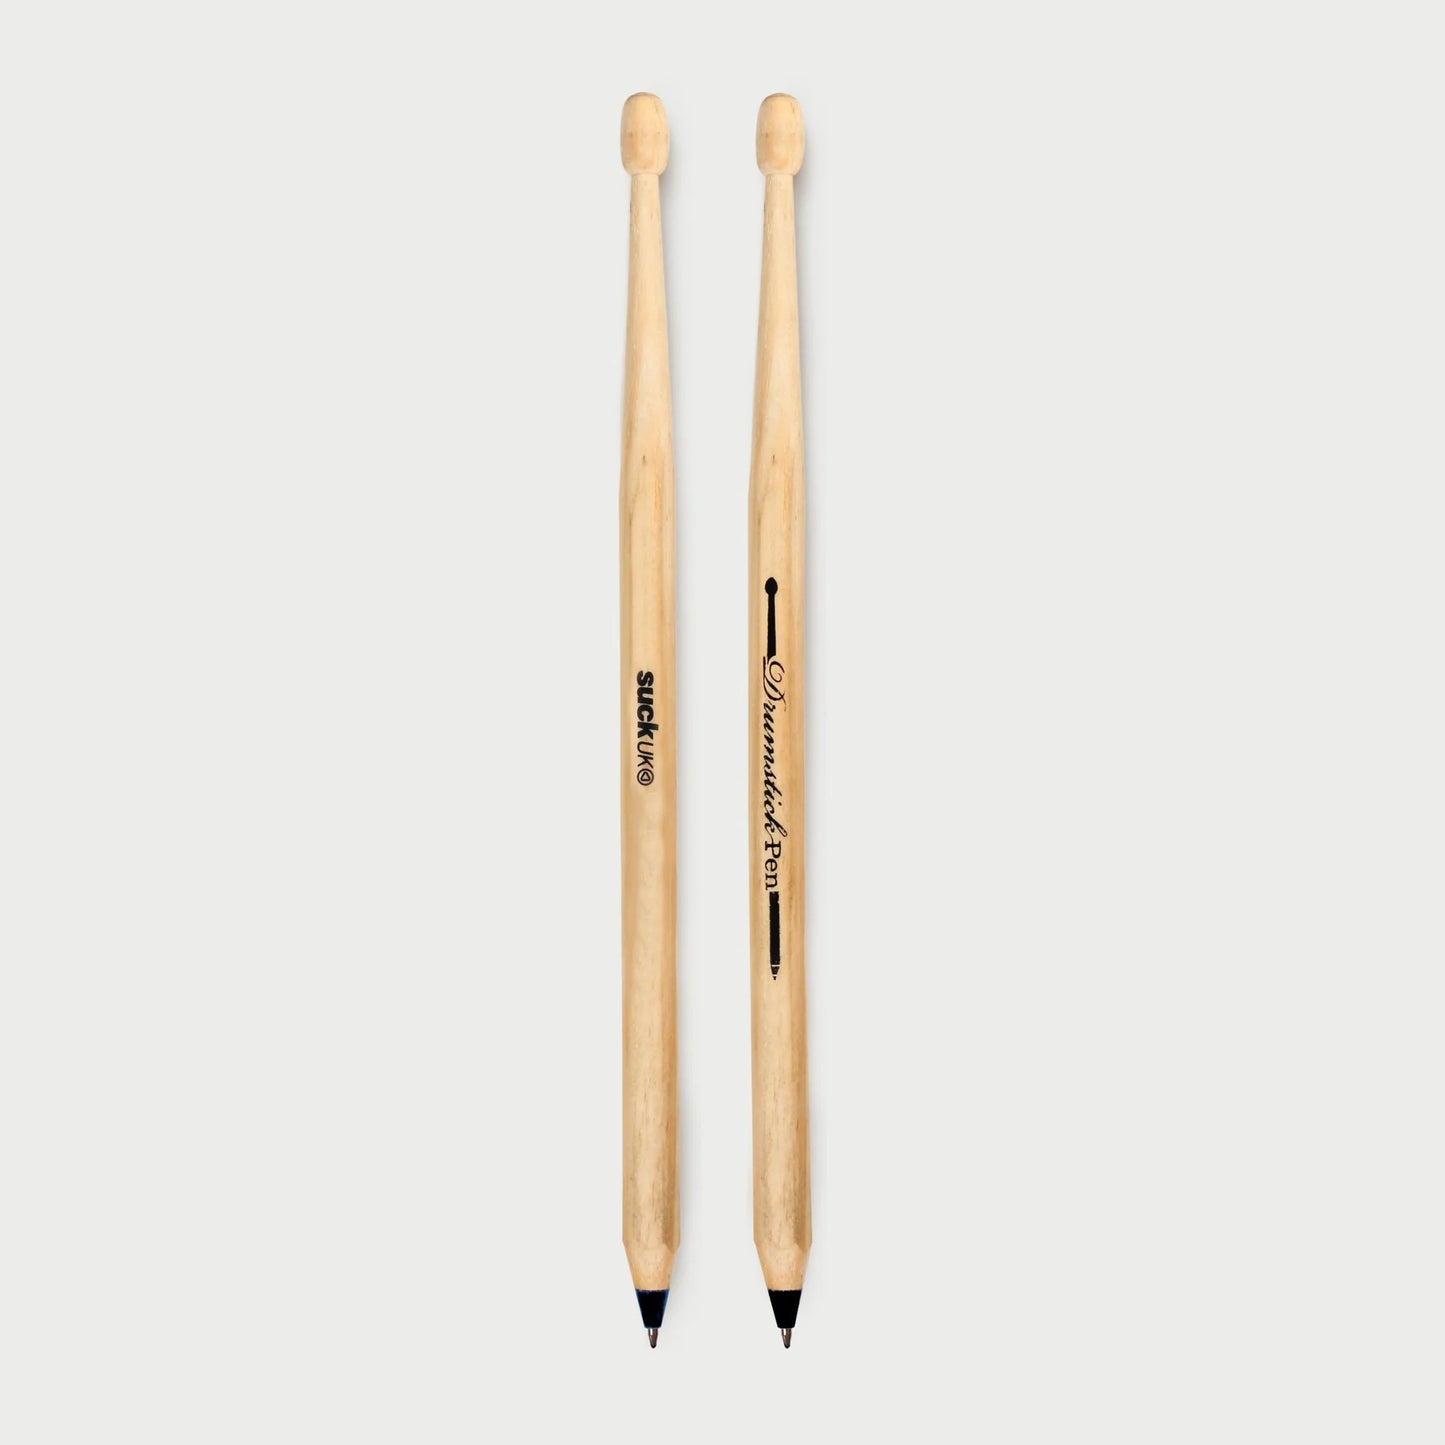 Drumstick pens - black | Suck UK